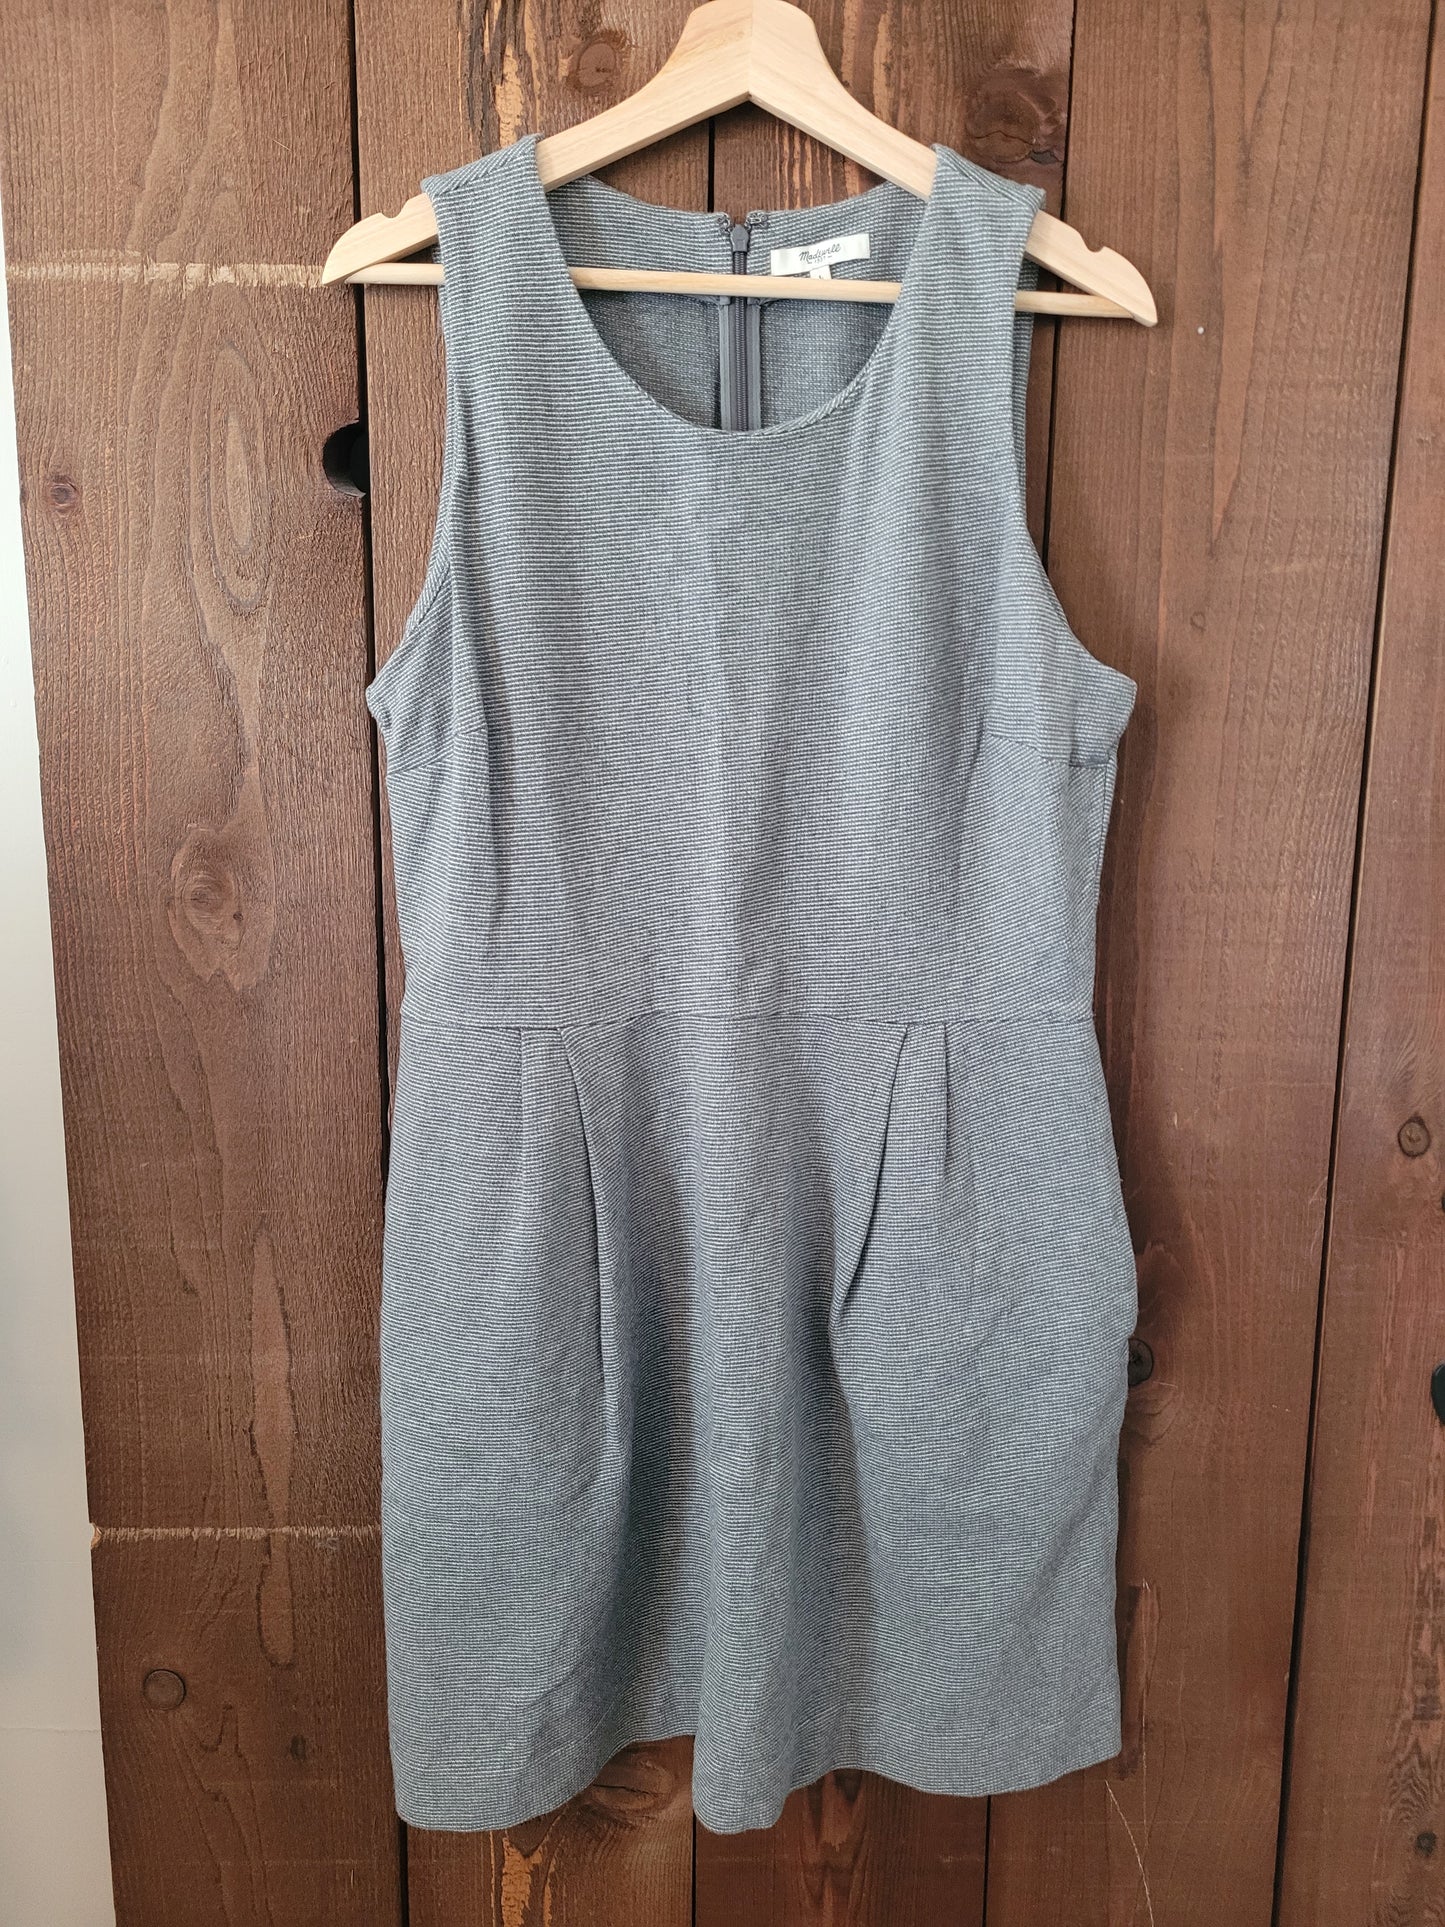 Madewell Women's Gray Dress Size L